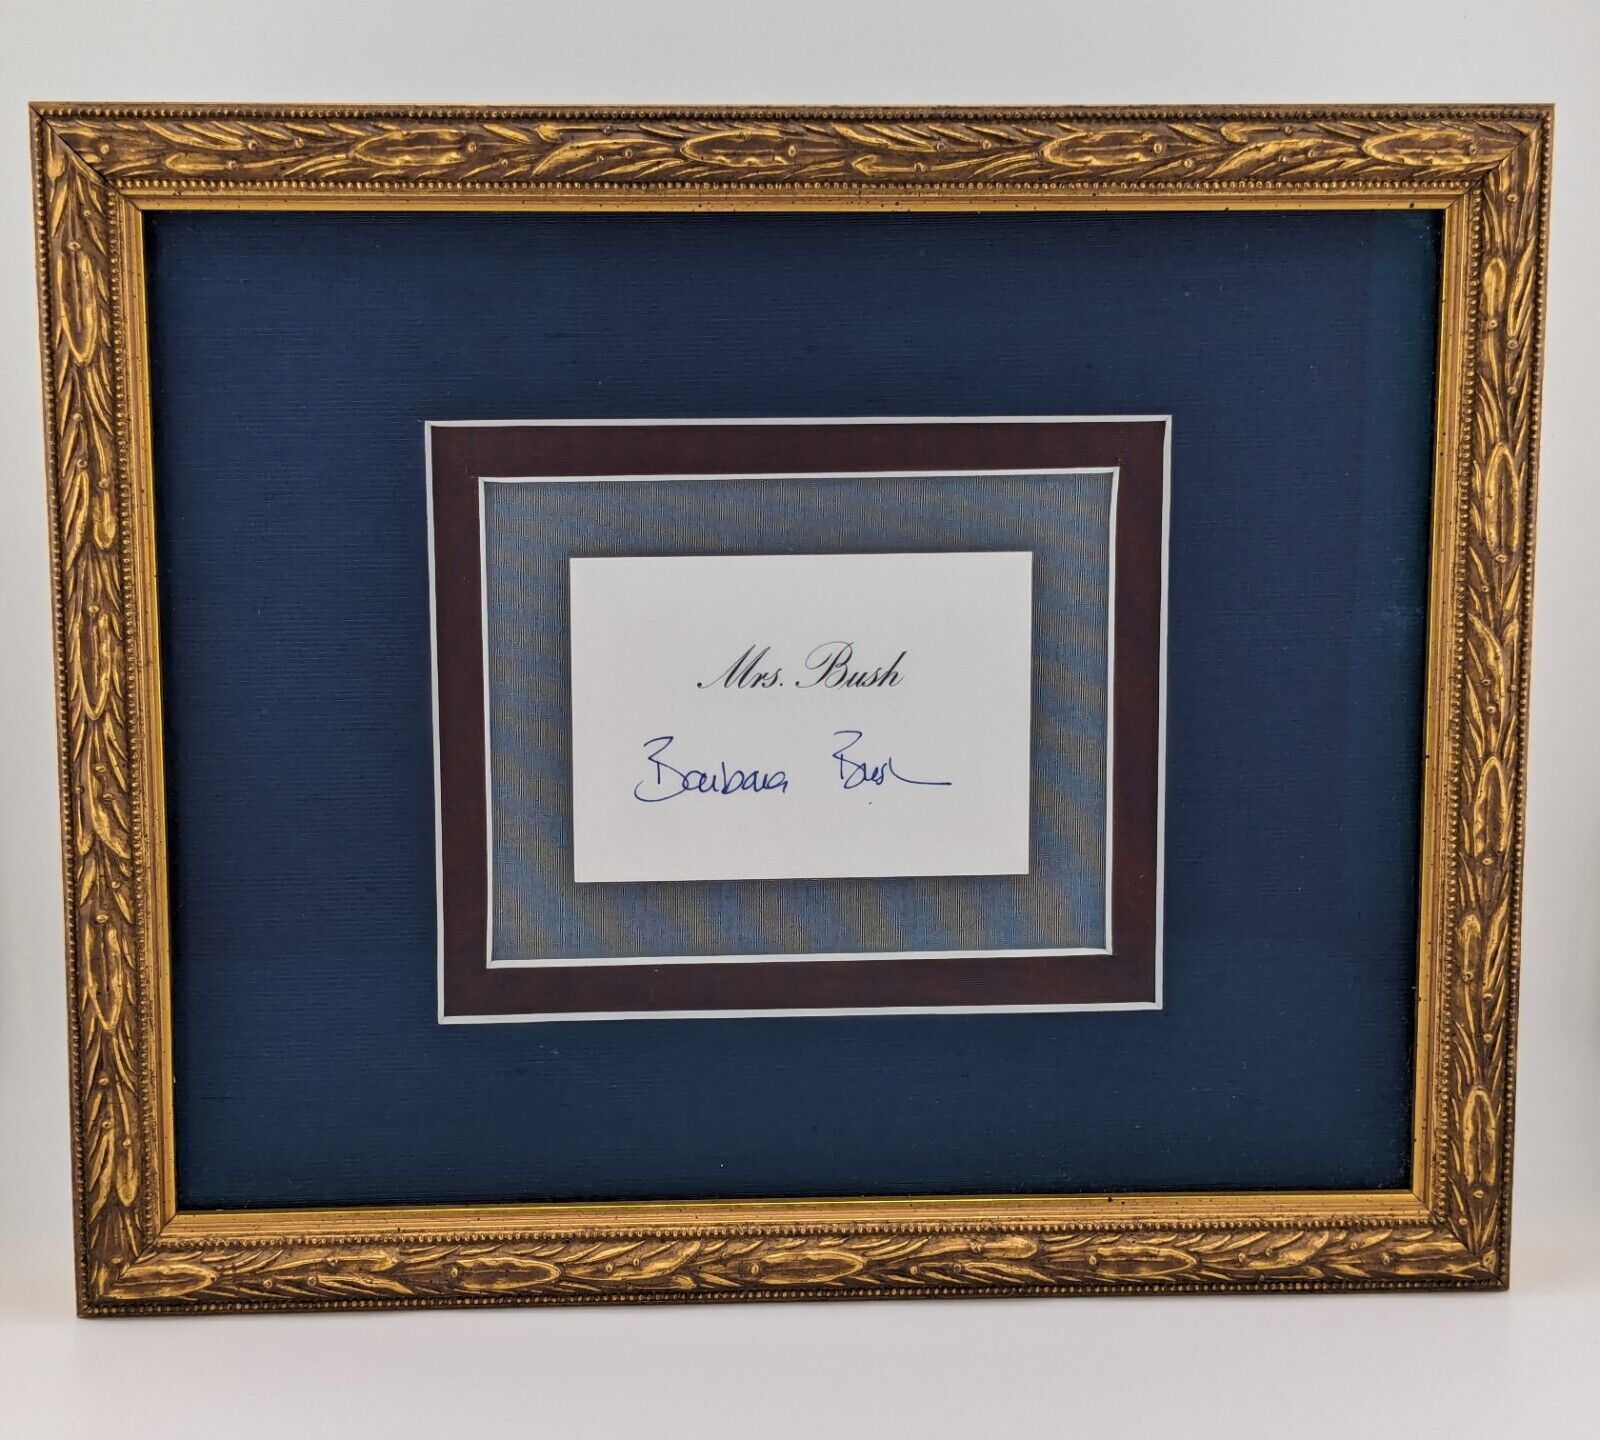 Barbara Bush Signed Card Professionally Framed Former First Lady